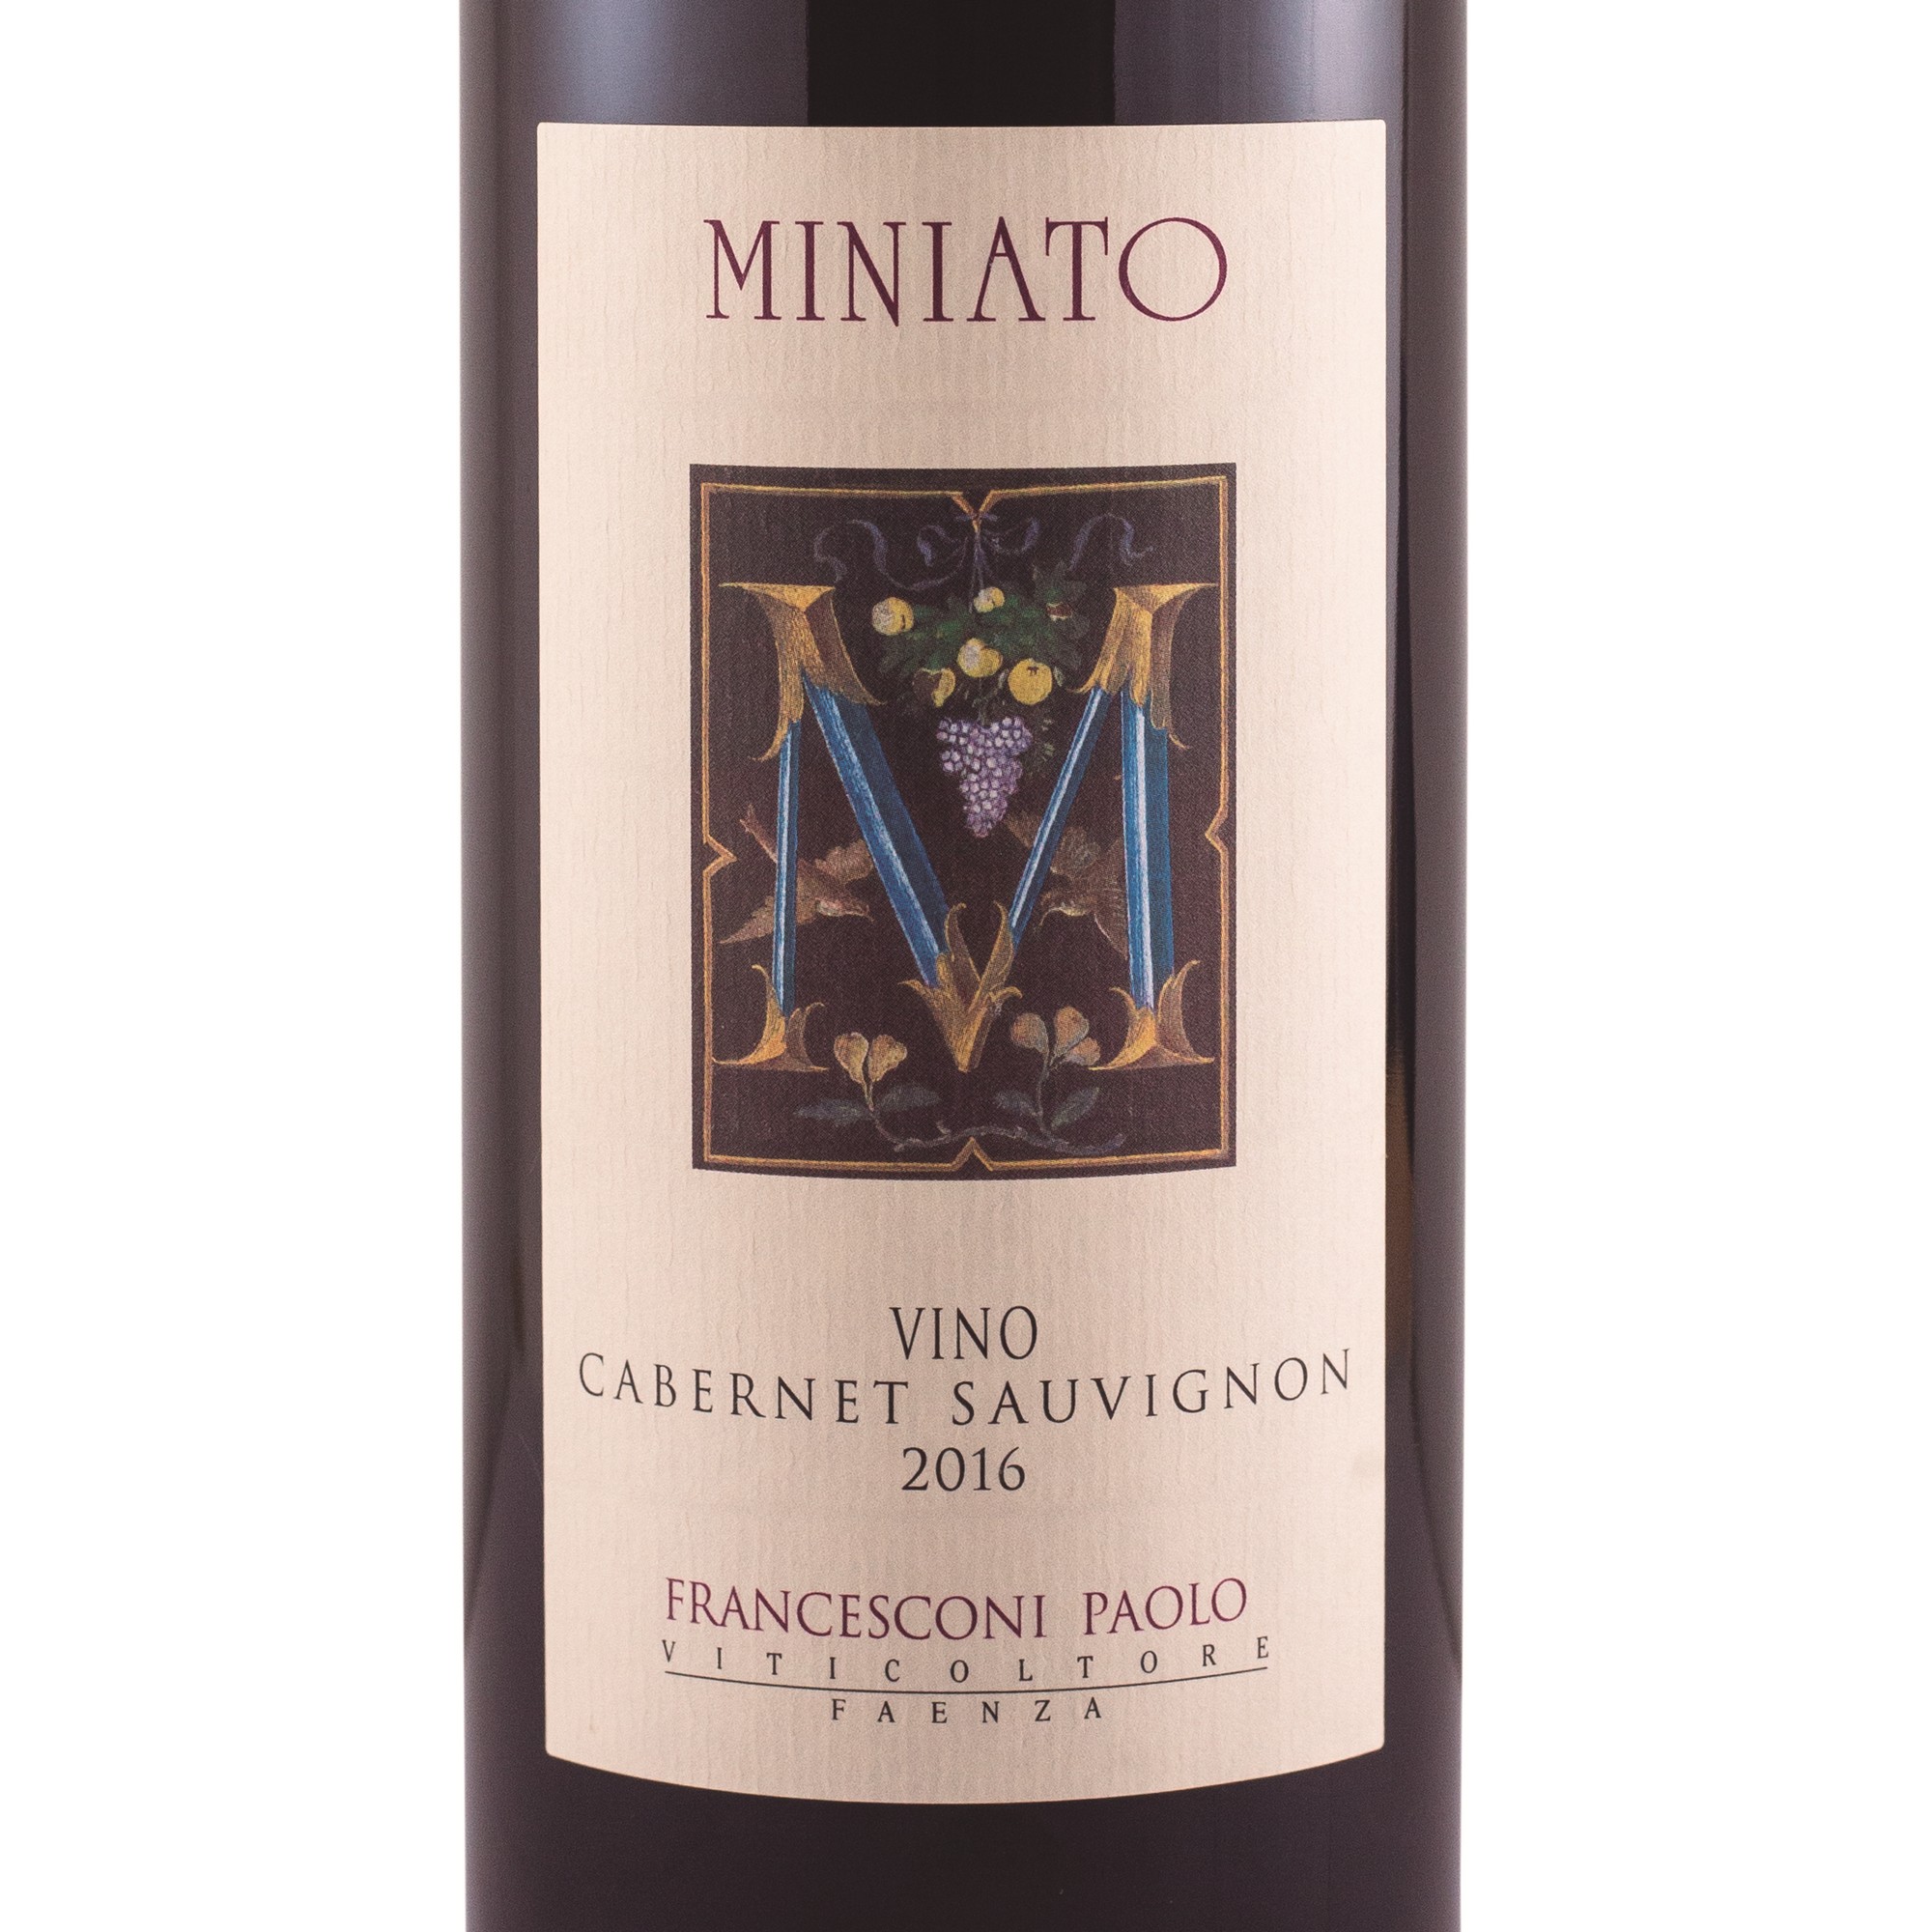 Vinho Tinto Italiano Miniato Cabernet Sauvignon Francesconi Paolo 2016